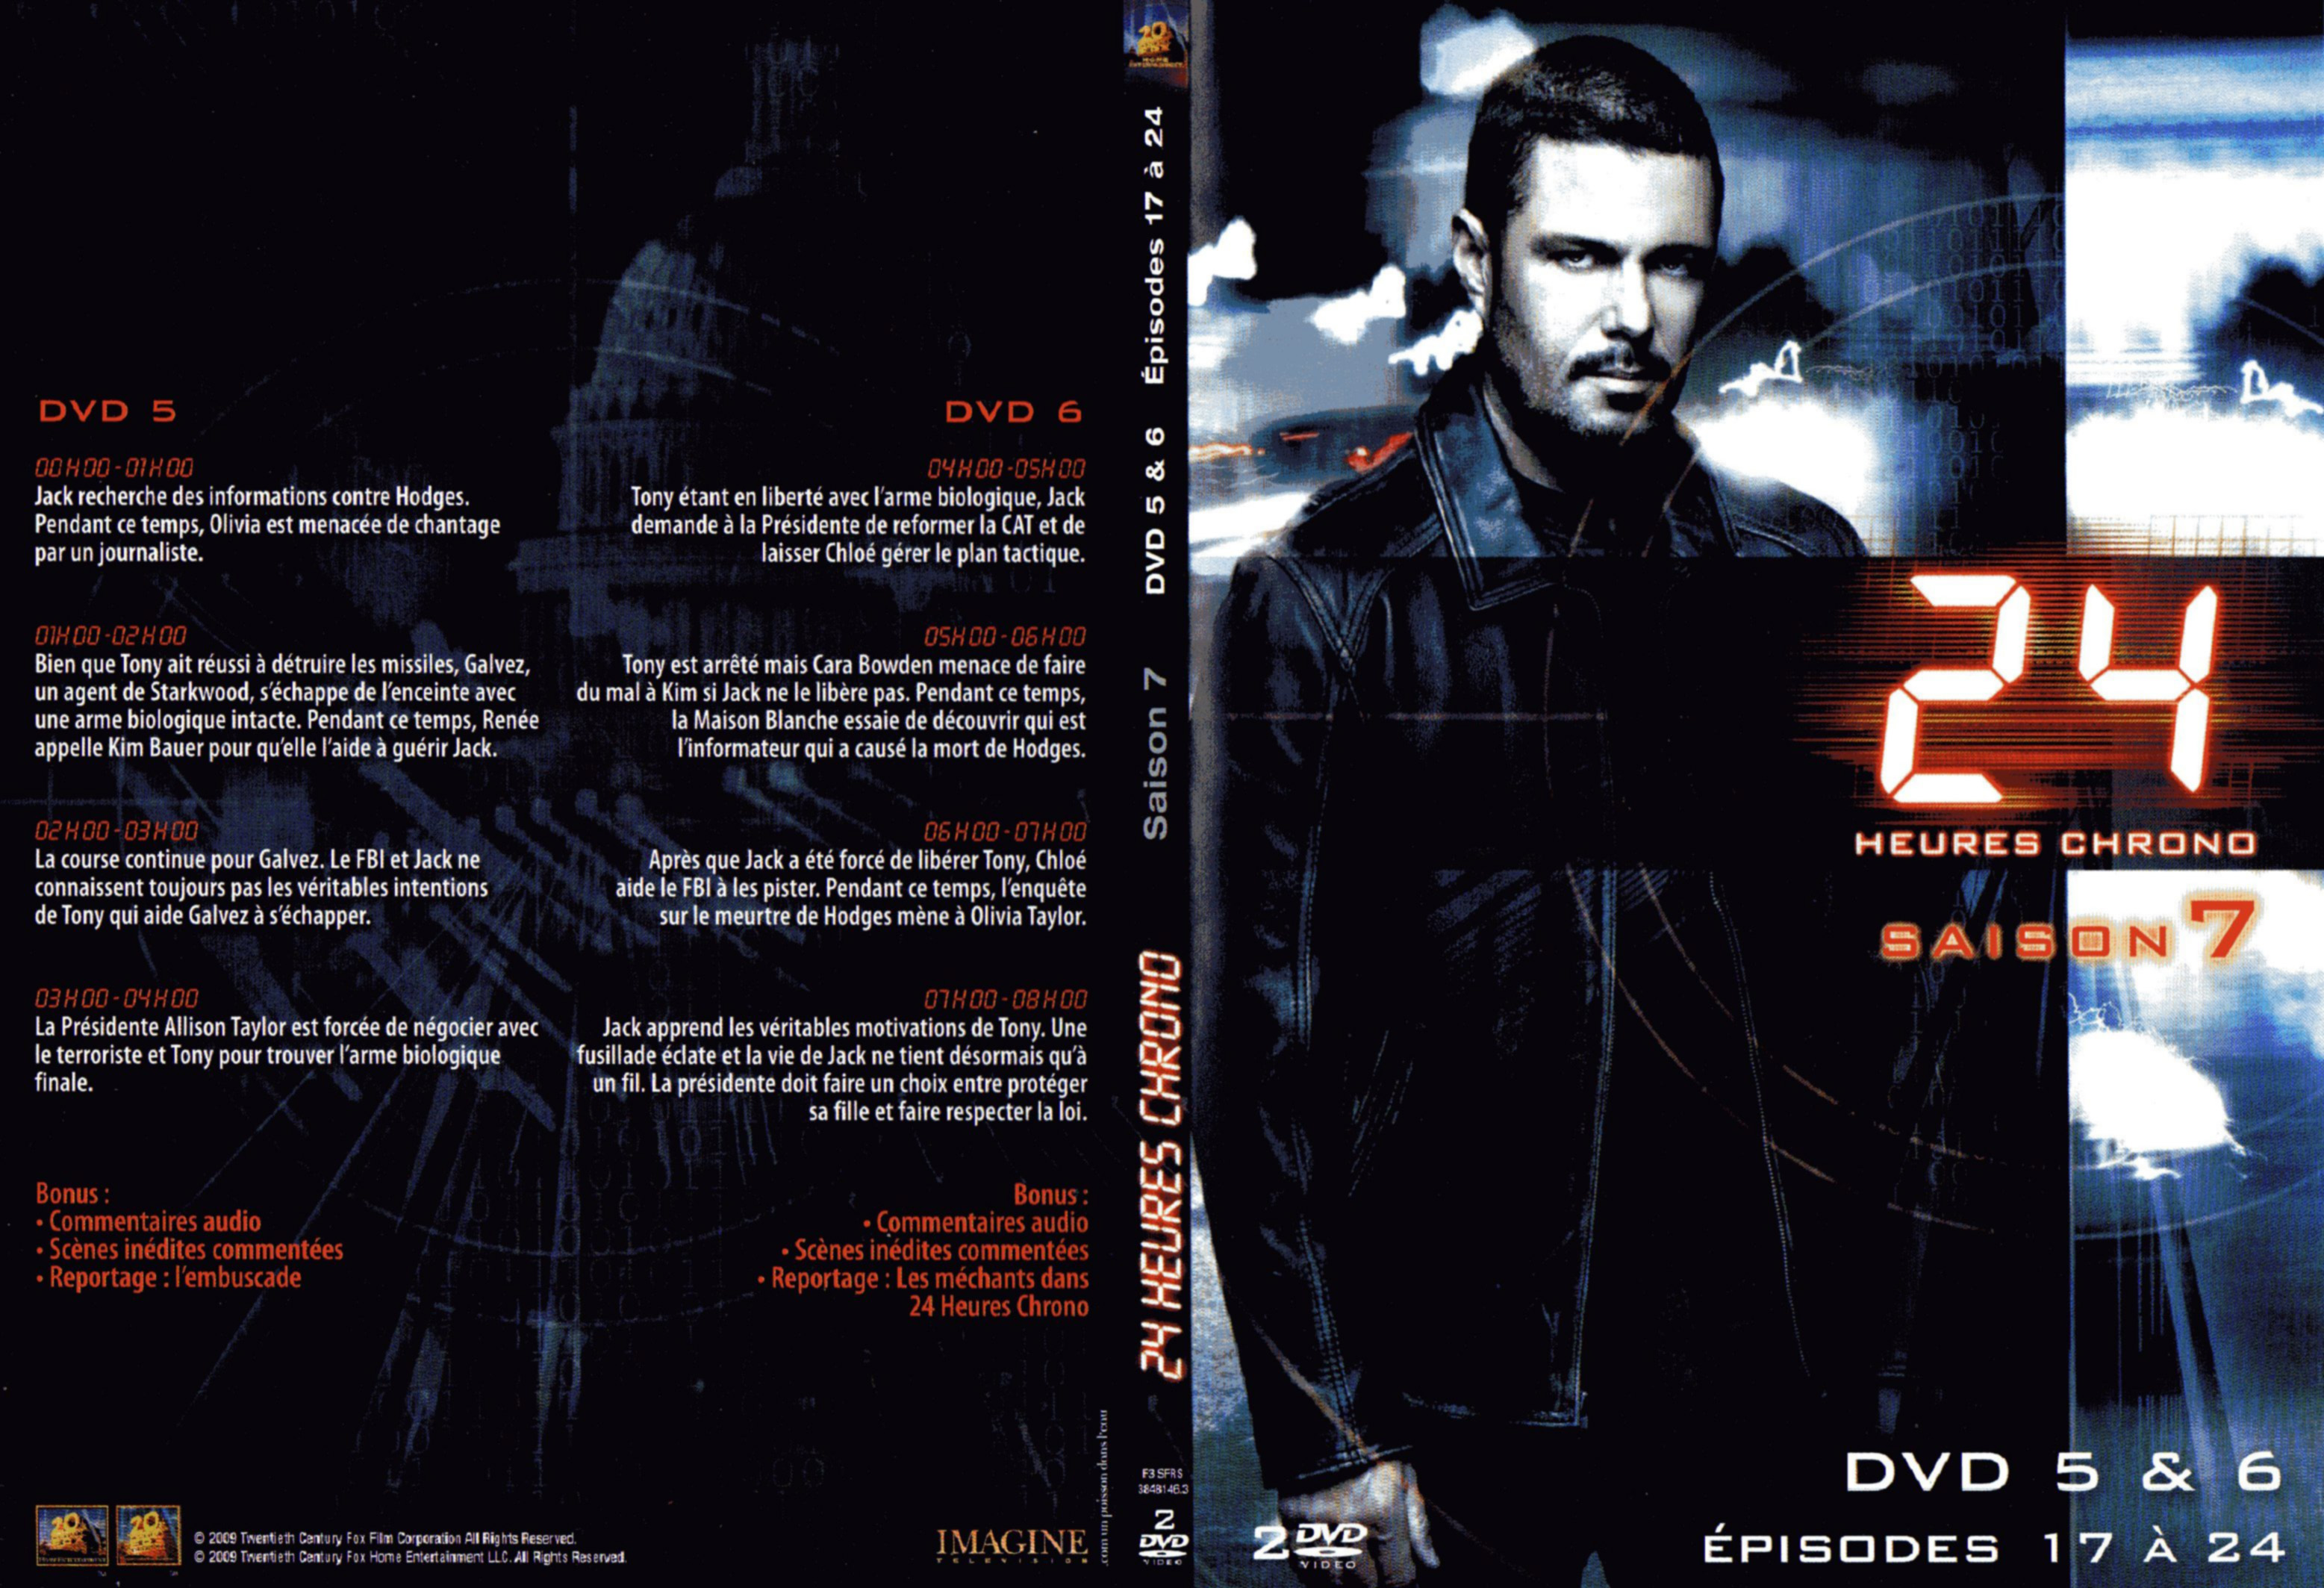 Jaquette DVD 24 heures chrono Saison 7 DVD 3